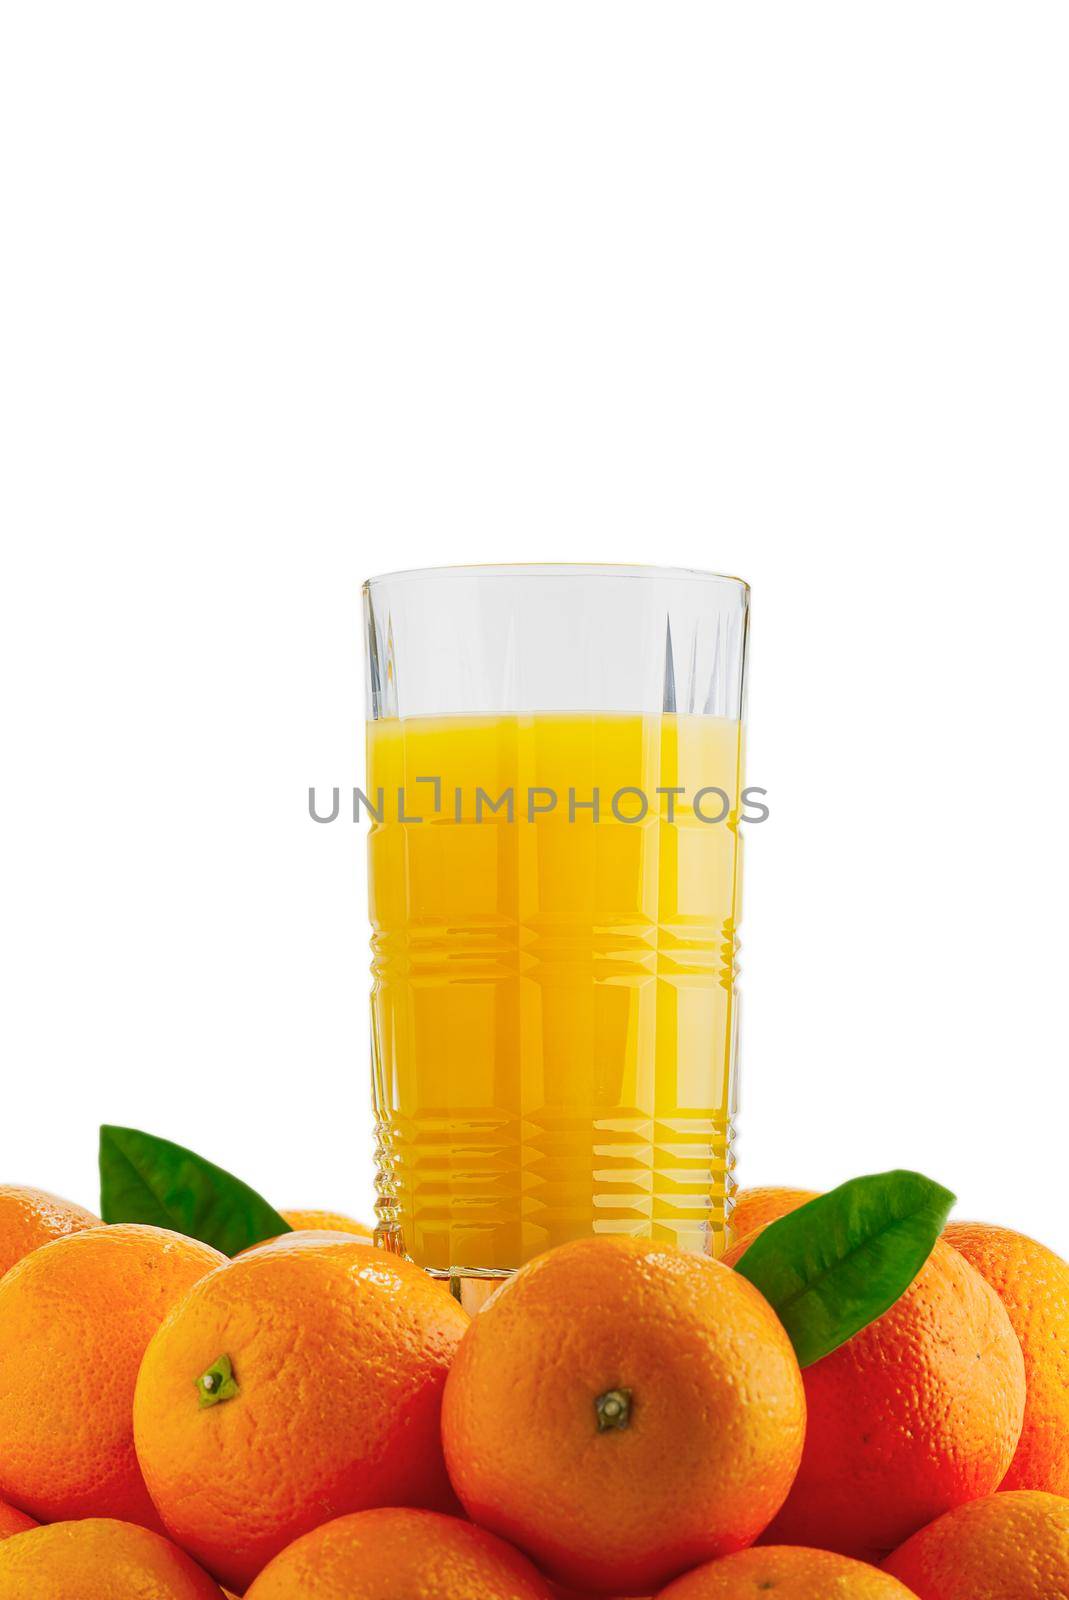 Fresh orange juice in glass orange fruits, isolated on white. Advertising concept. packing design by PhotoTime